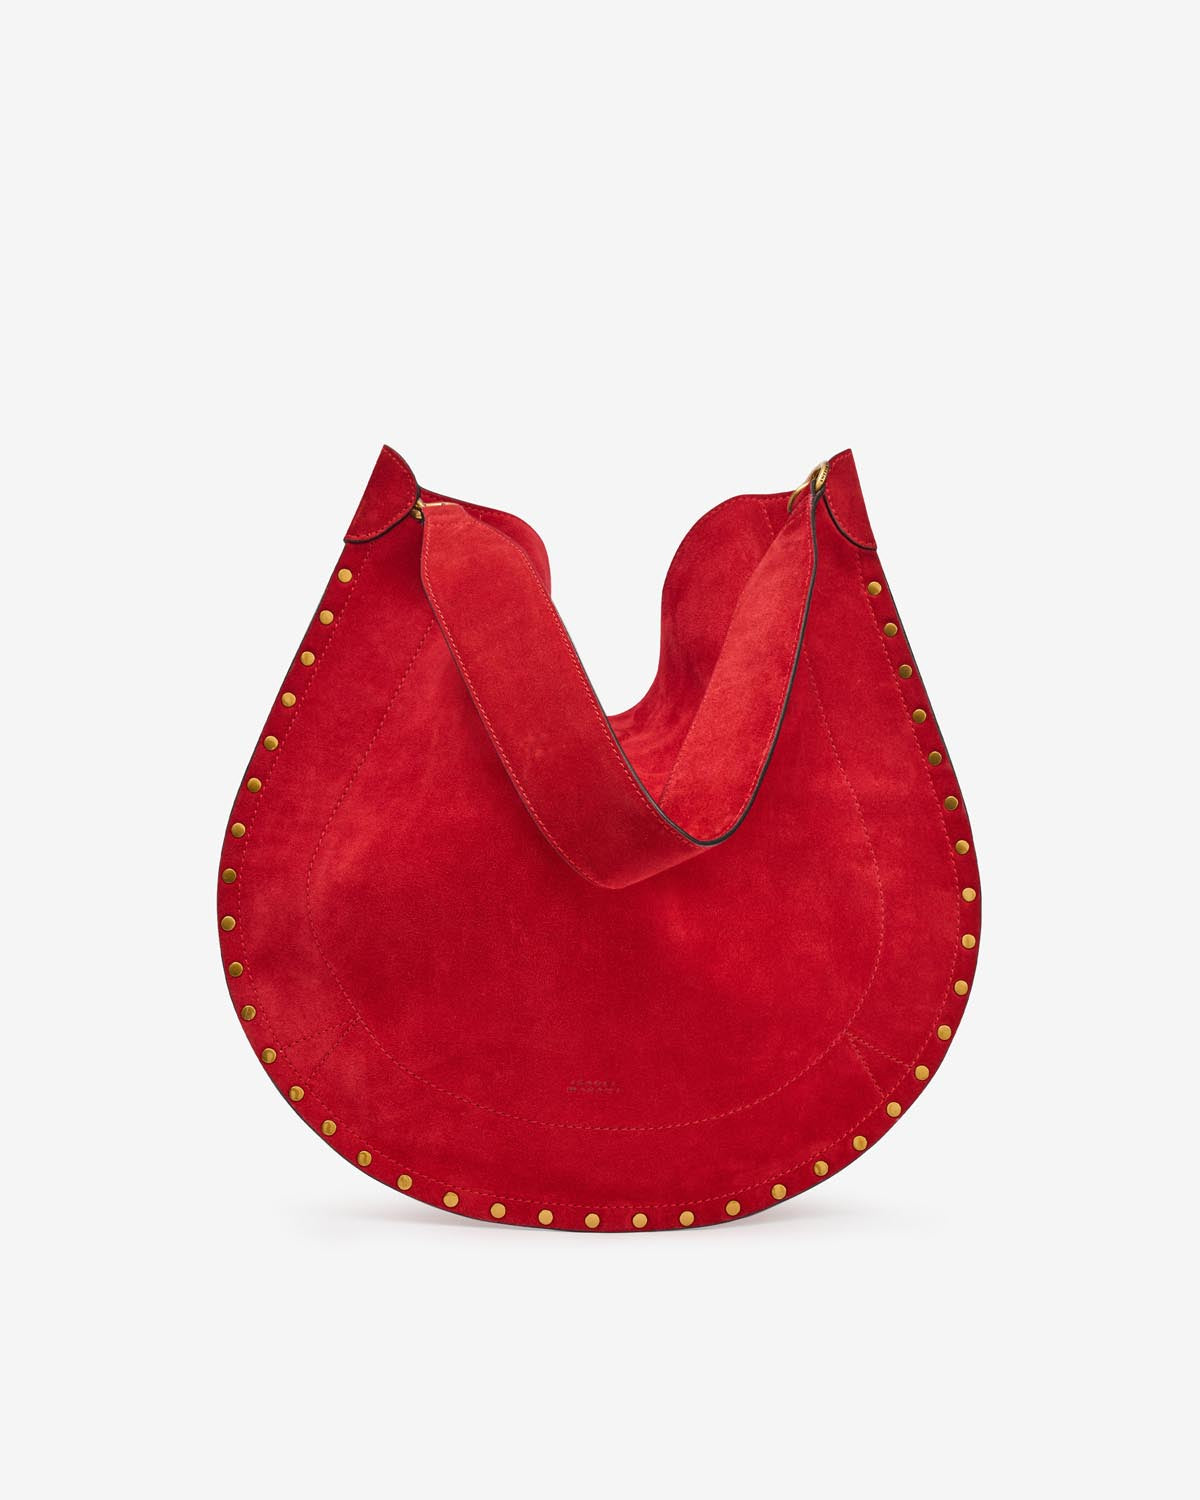 Oskan hobo soft borsa Woman Scarlet red 5